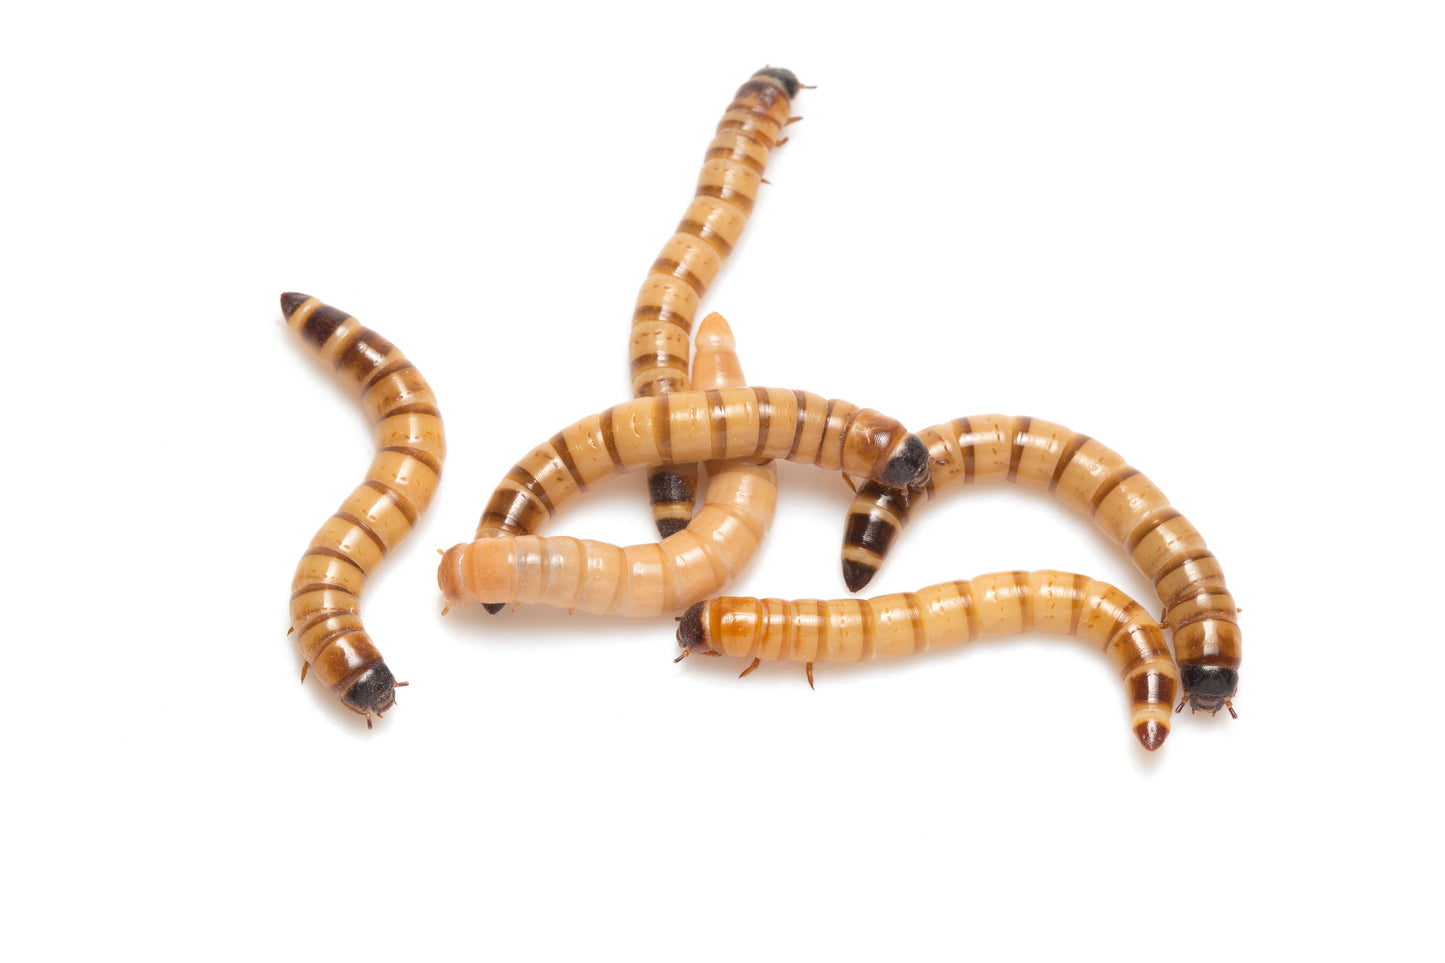 Zophoba morio or king worm (4cm approx)